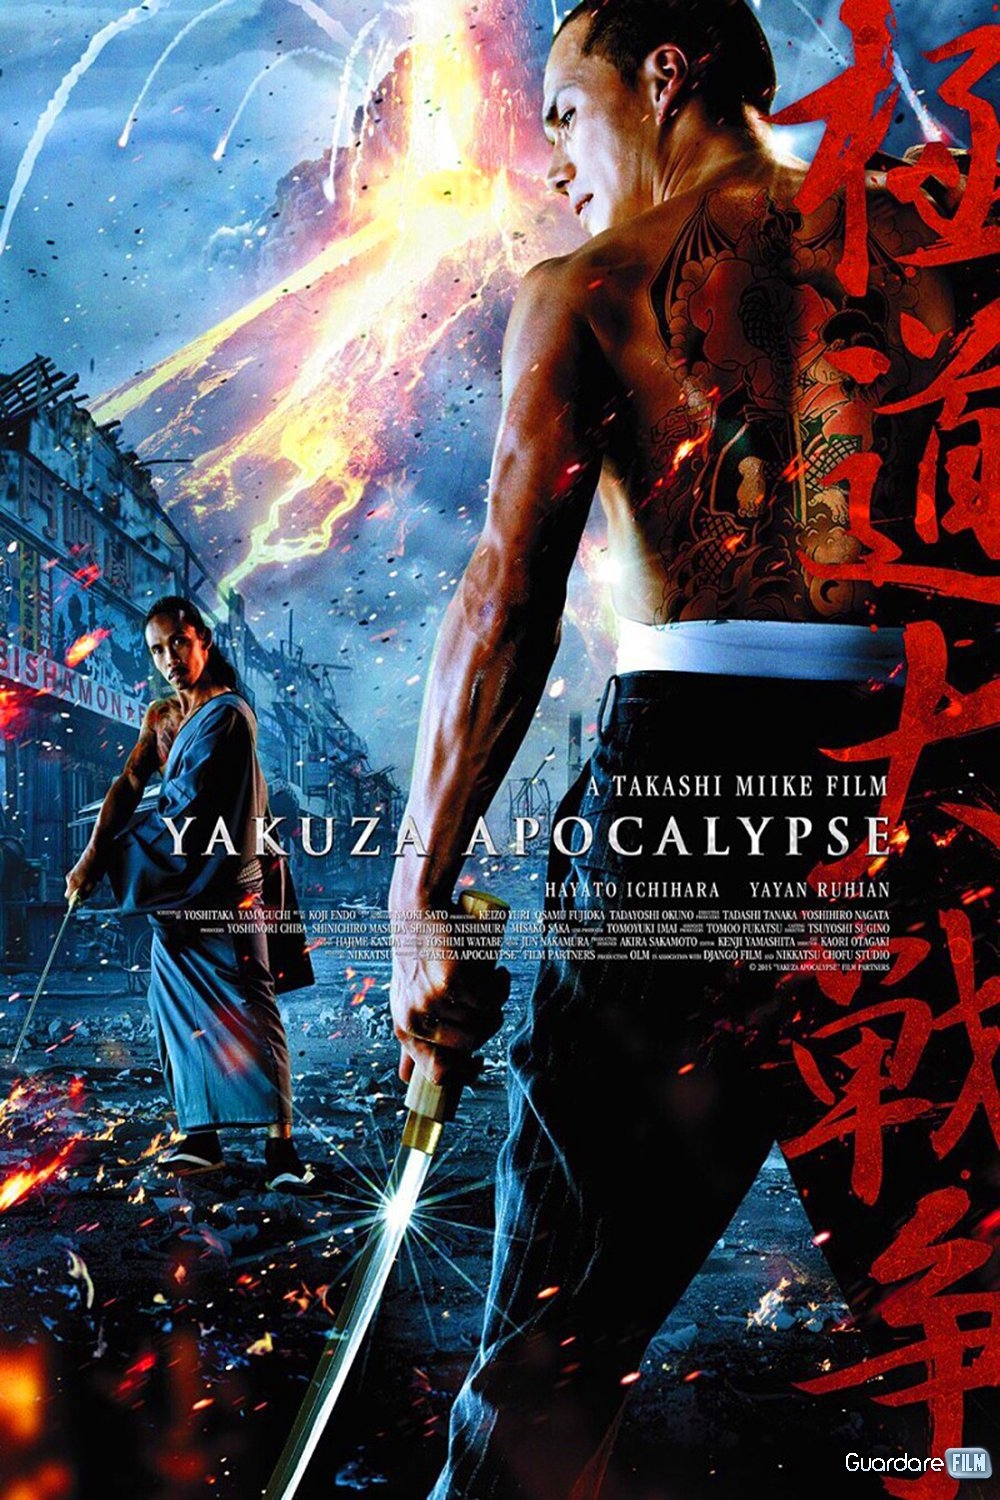 Yakuza Apocalypse: The Great War of the Underworld (2015)